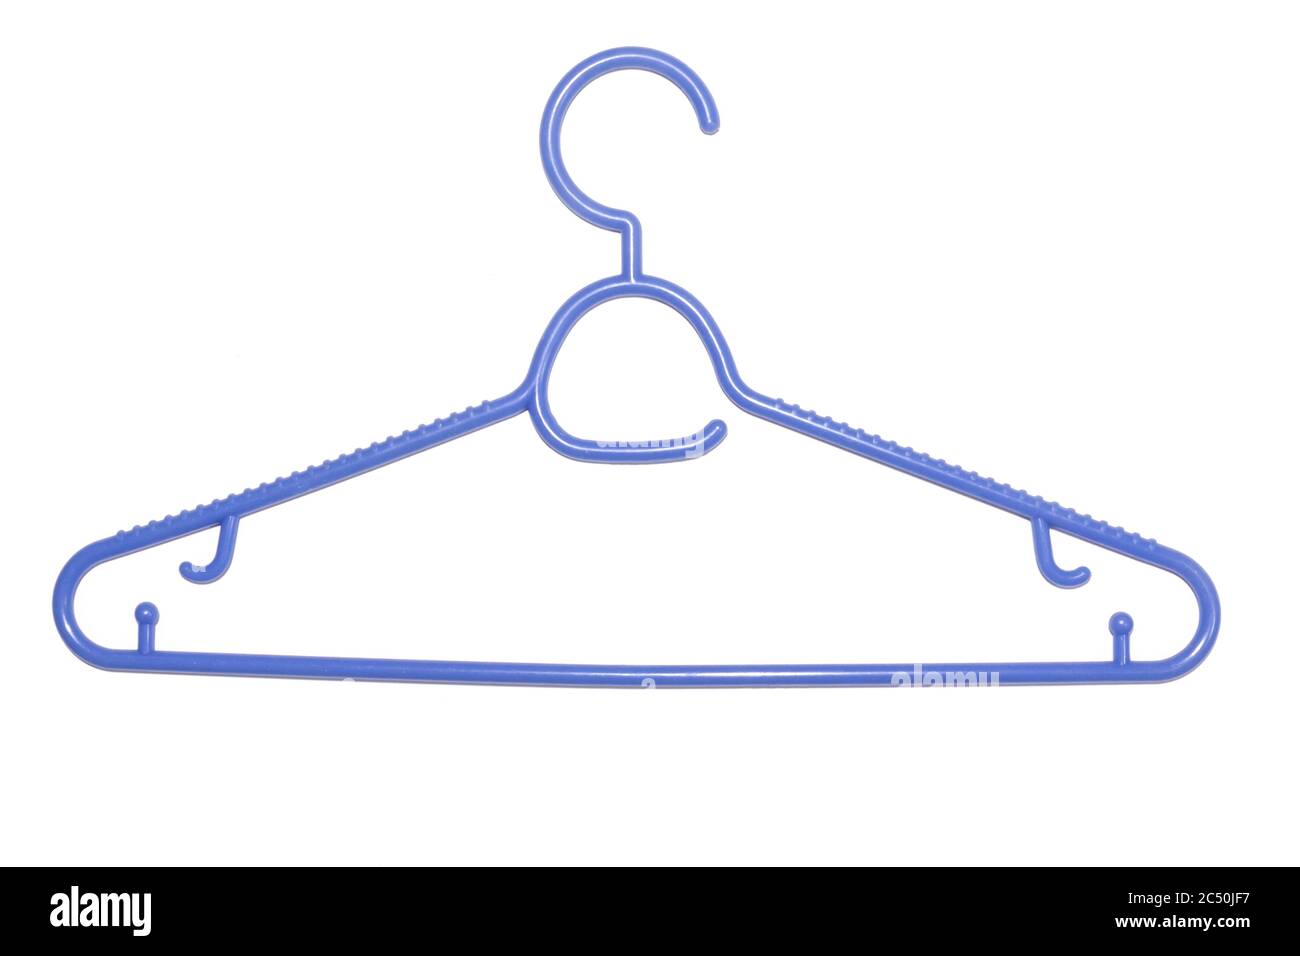 A blue plastic coat hanger isolated on white background. Stock Photo